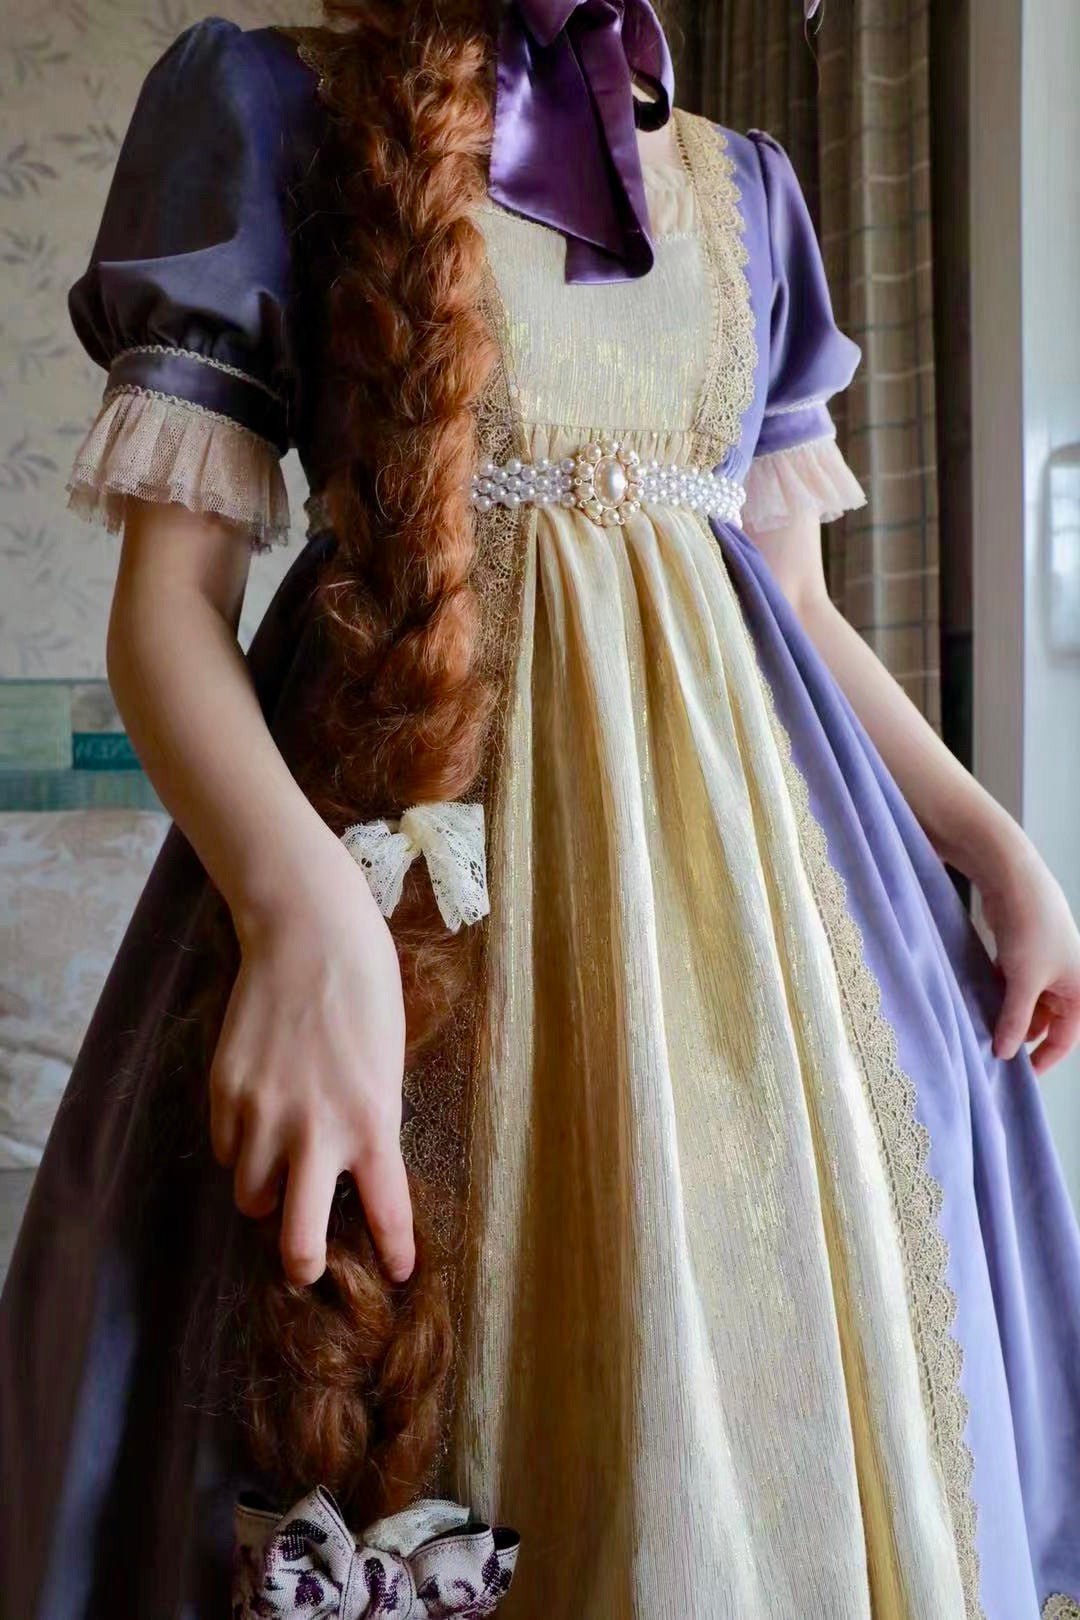 Bridgerton Inspired Regency Dress With Purple Velvet - Regency Era Ball Gown Plus Size - WonderlandByLilian